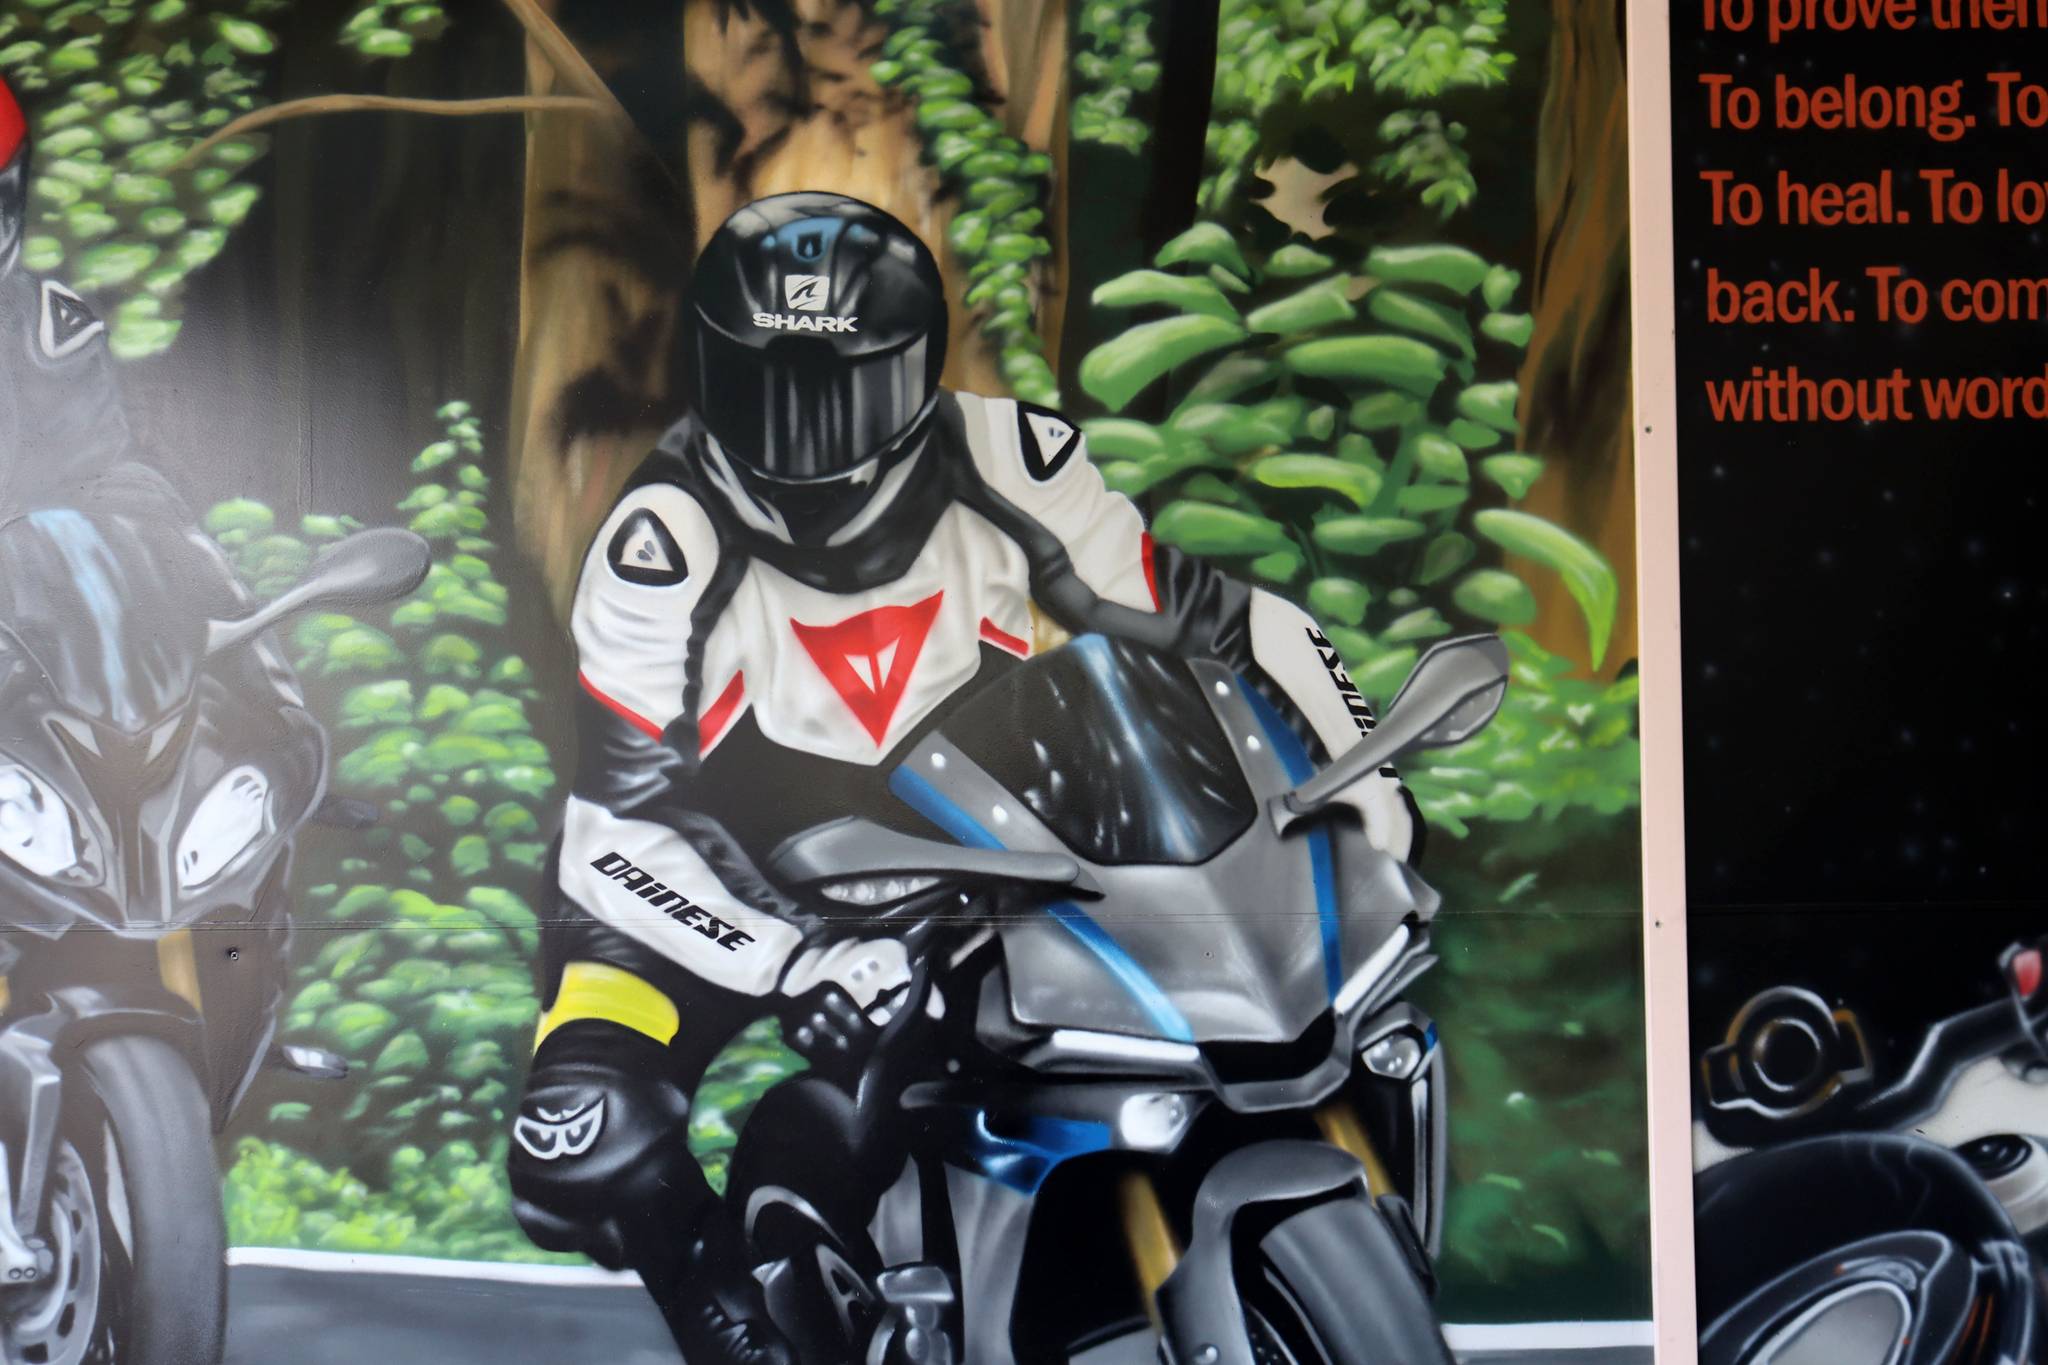 Urban Art Australia&mdash;Motorcycling Murals